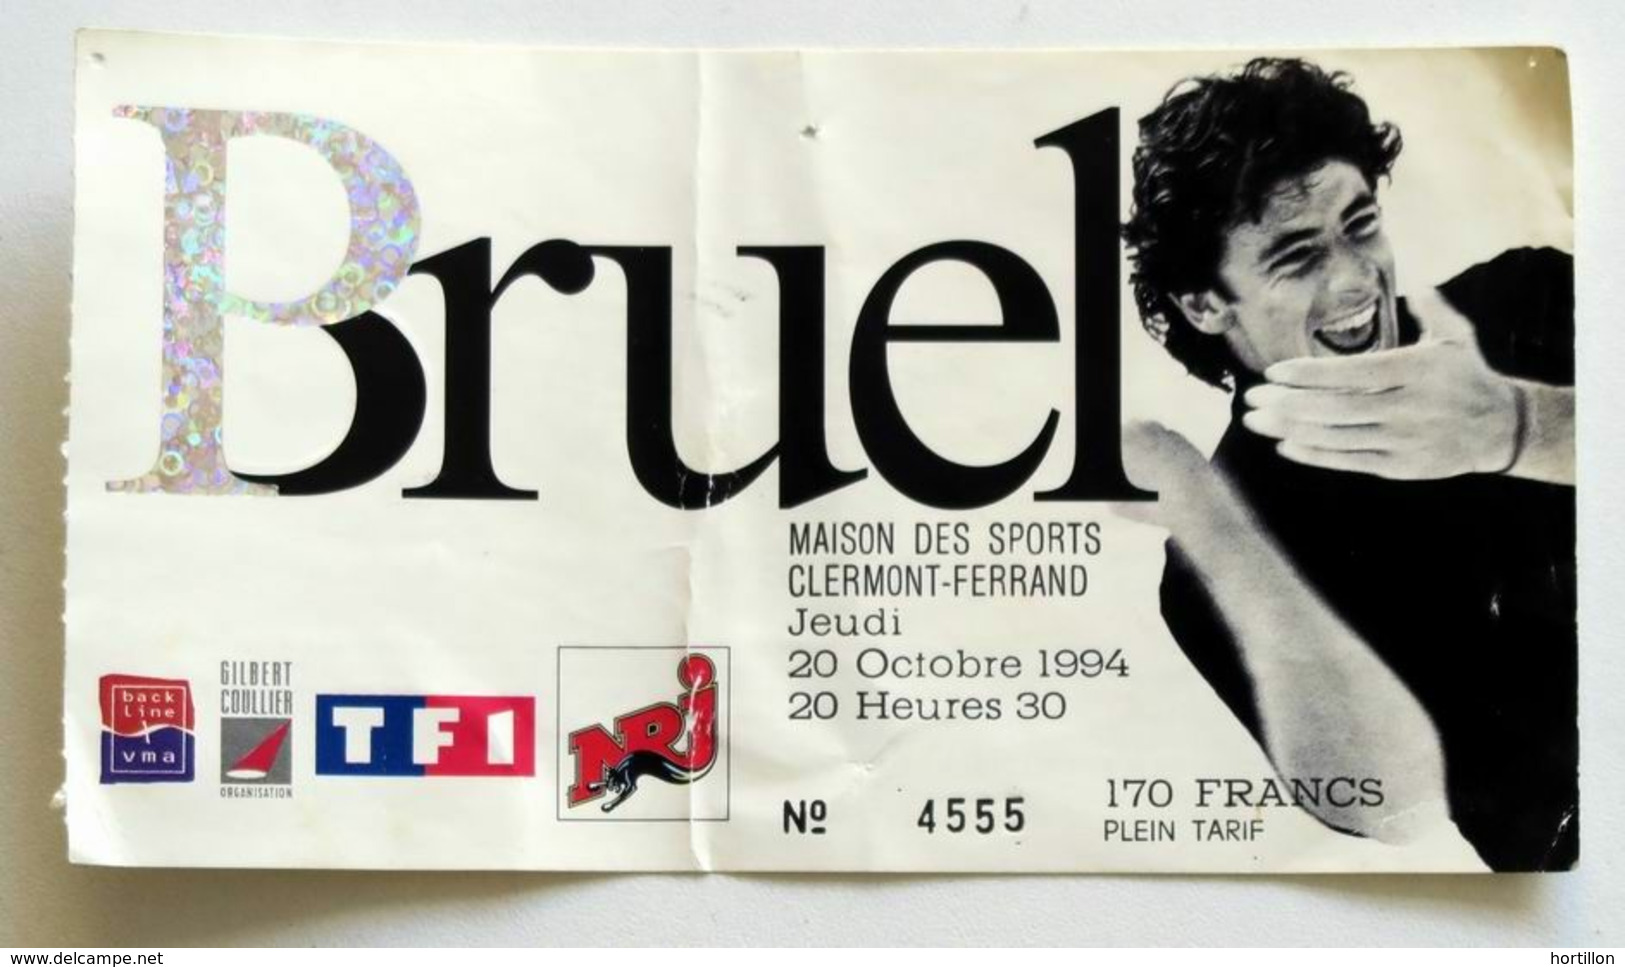 PATRICK BRUEL Billet Concert Collector Ticket CLERMONT-FERRAND 20 OCTOBRE 1994 - Konzertkarten